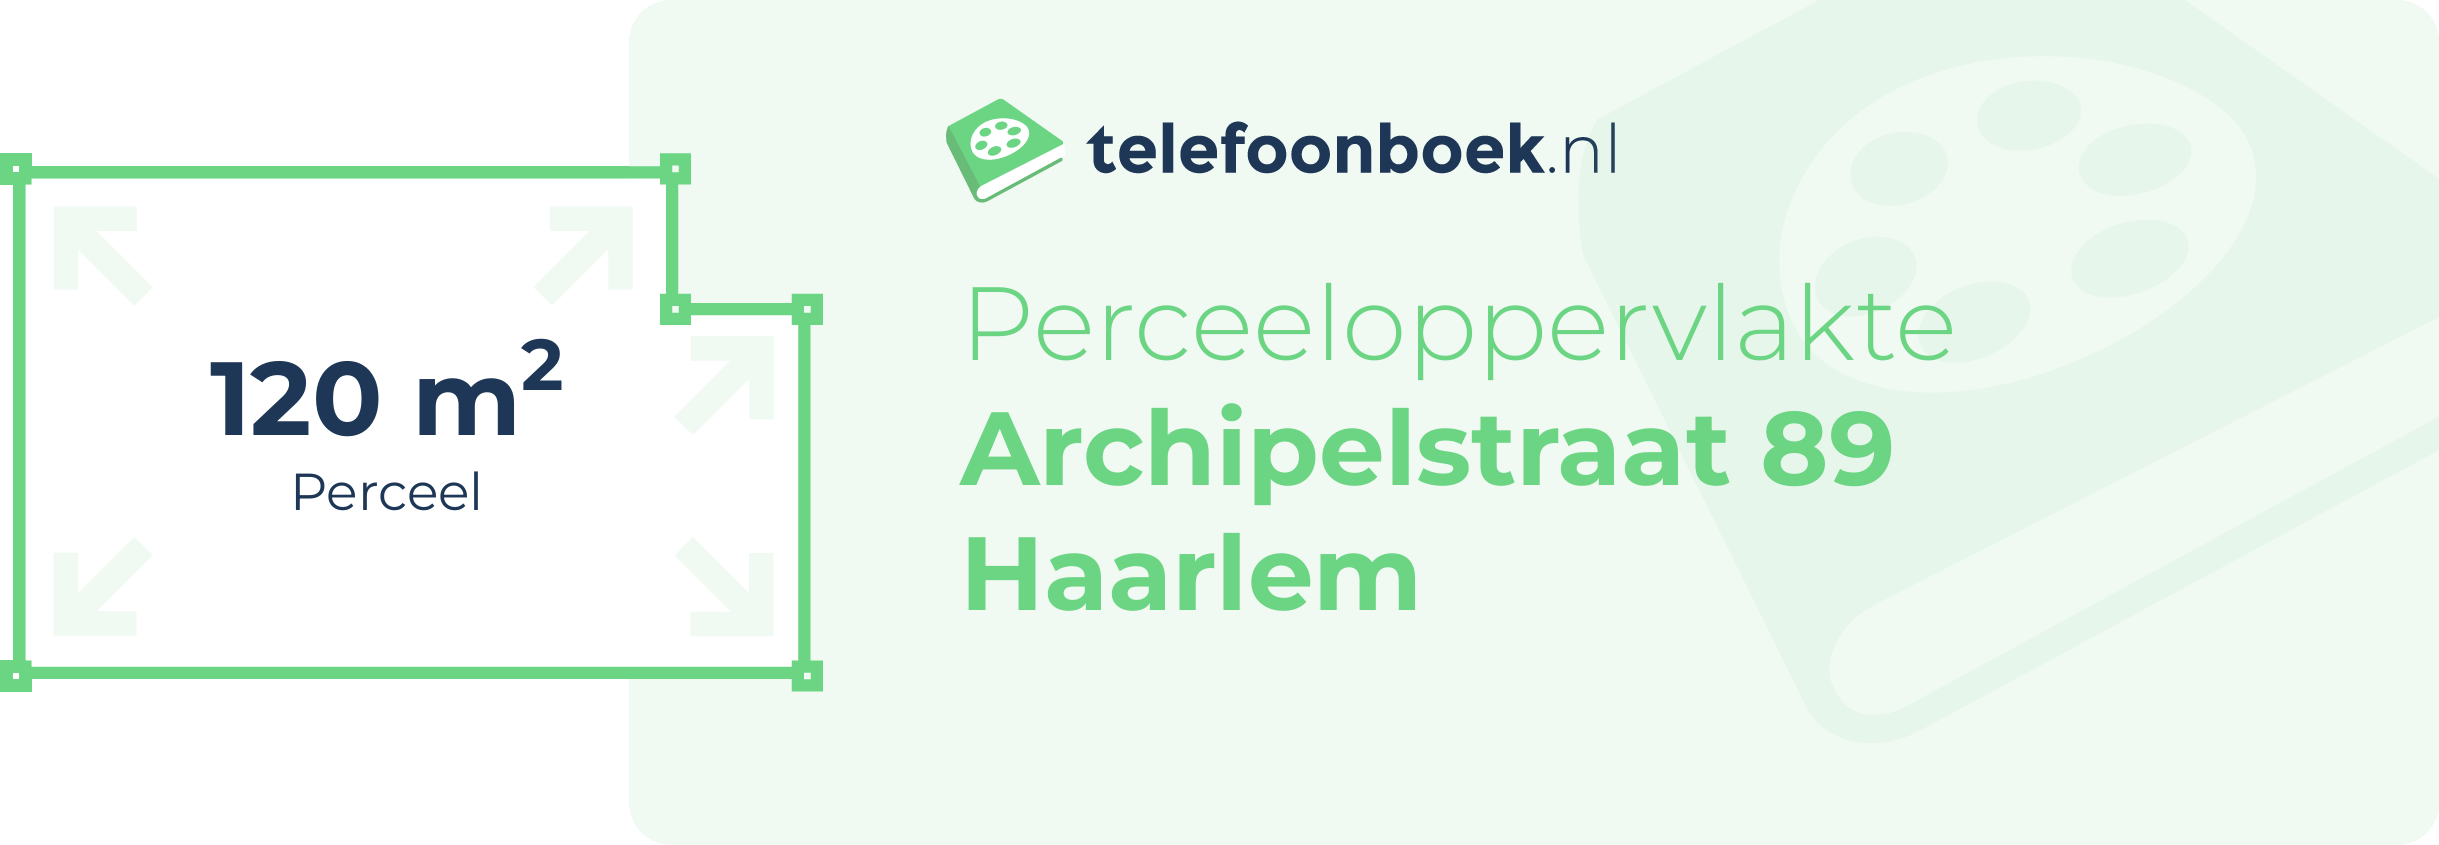 Perceeloppervlakte Archipelstraat 89 Haarlem